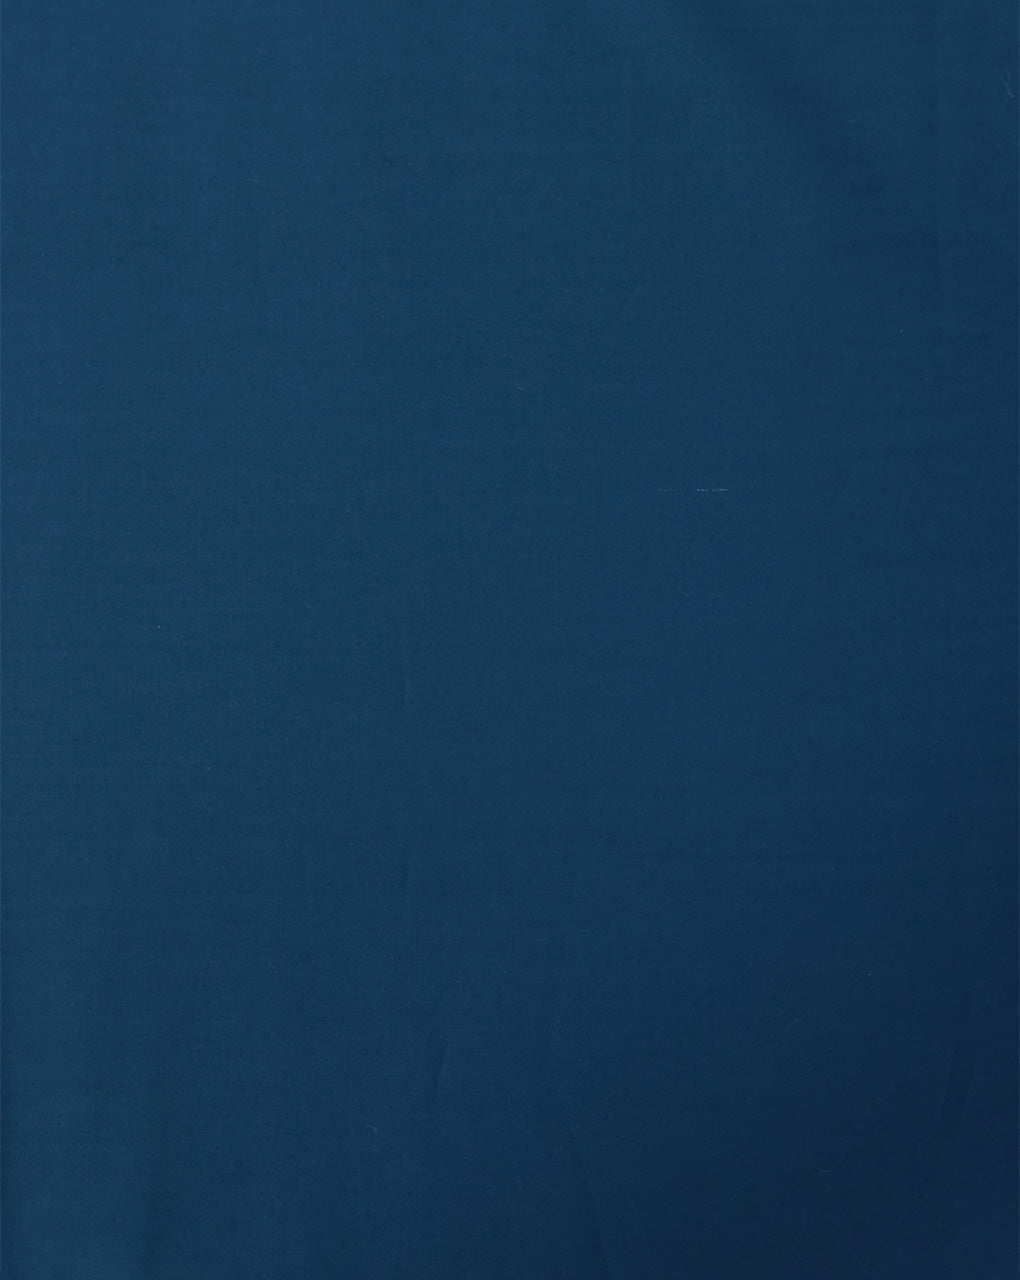 DARK BLUE PLAIN GIZA COTTON FABRIC (WIDTH - 58 INCHES)